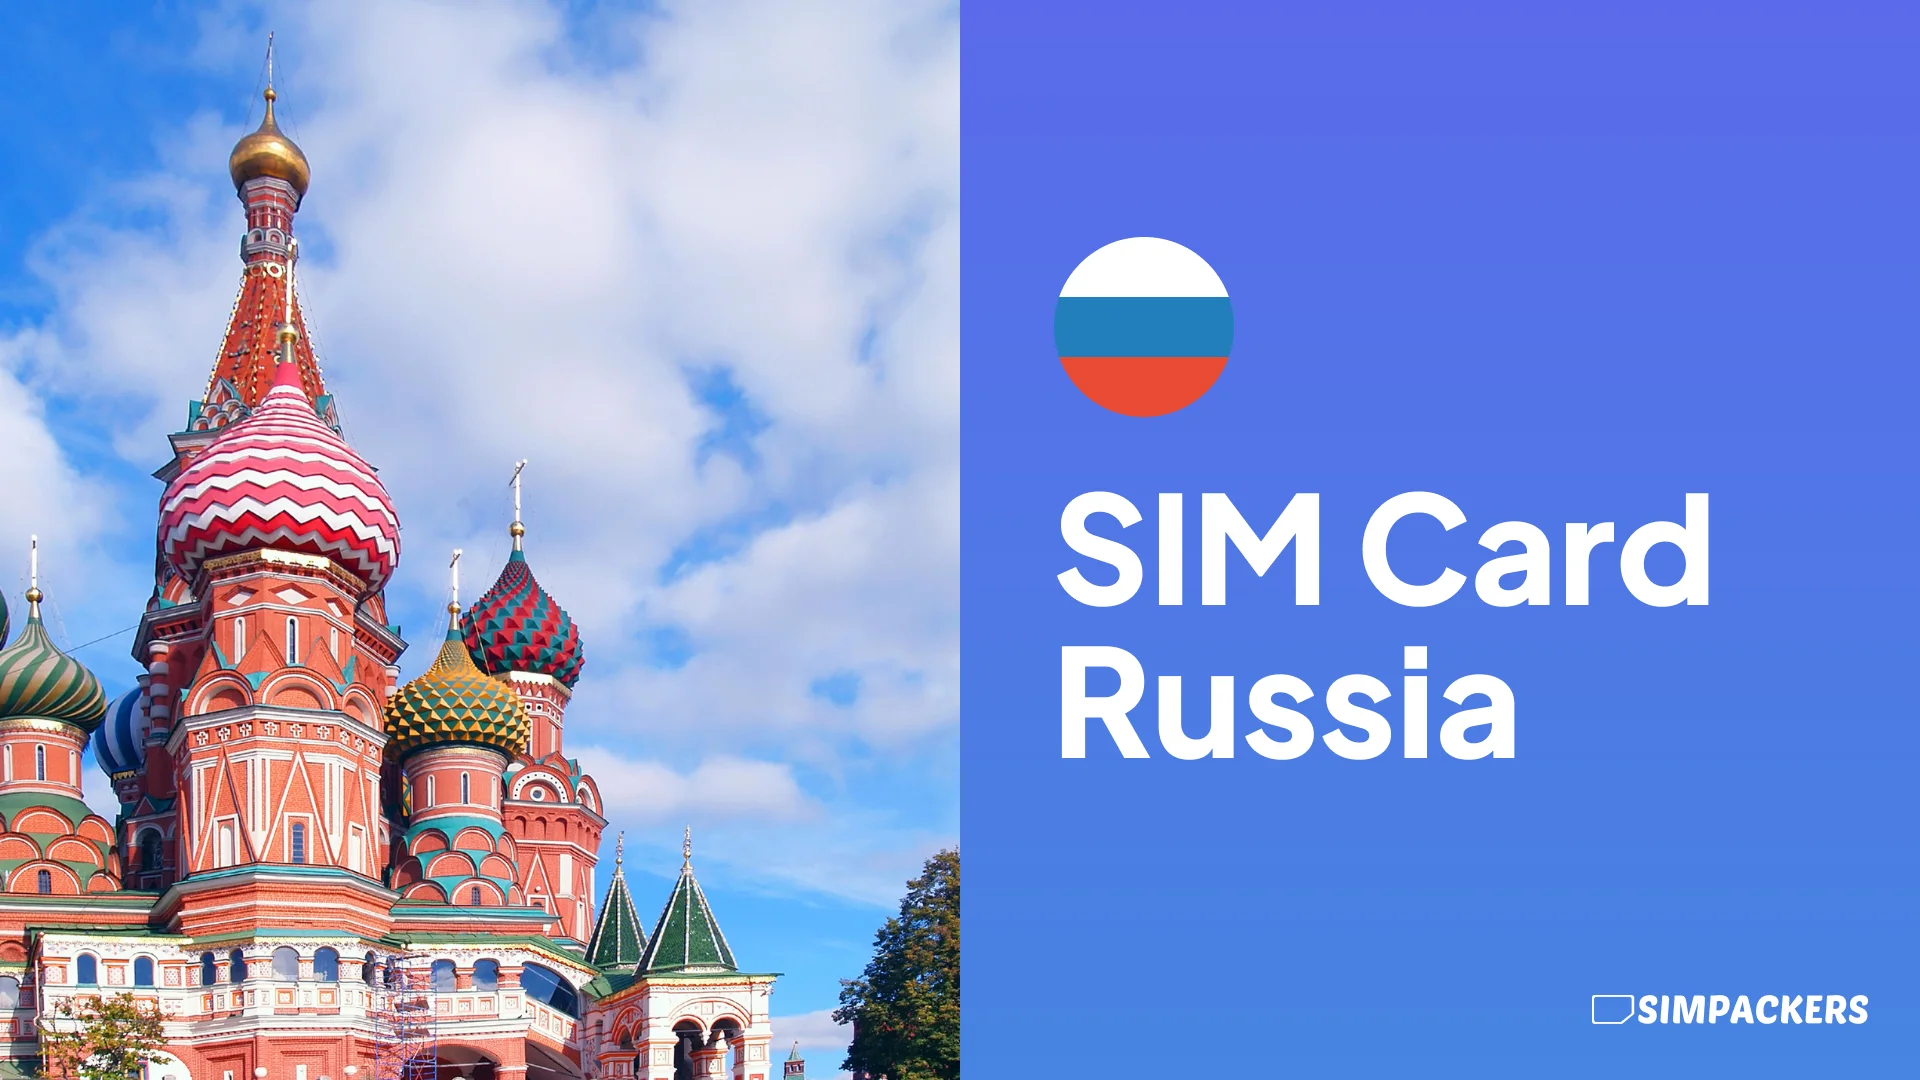 EN/FEATURED_IMAGES/sim-card-russia.webp